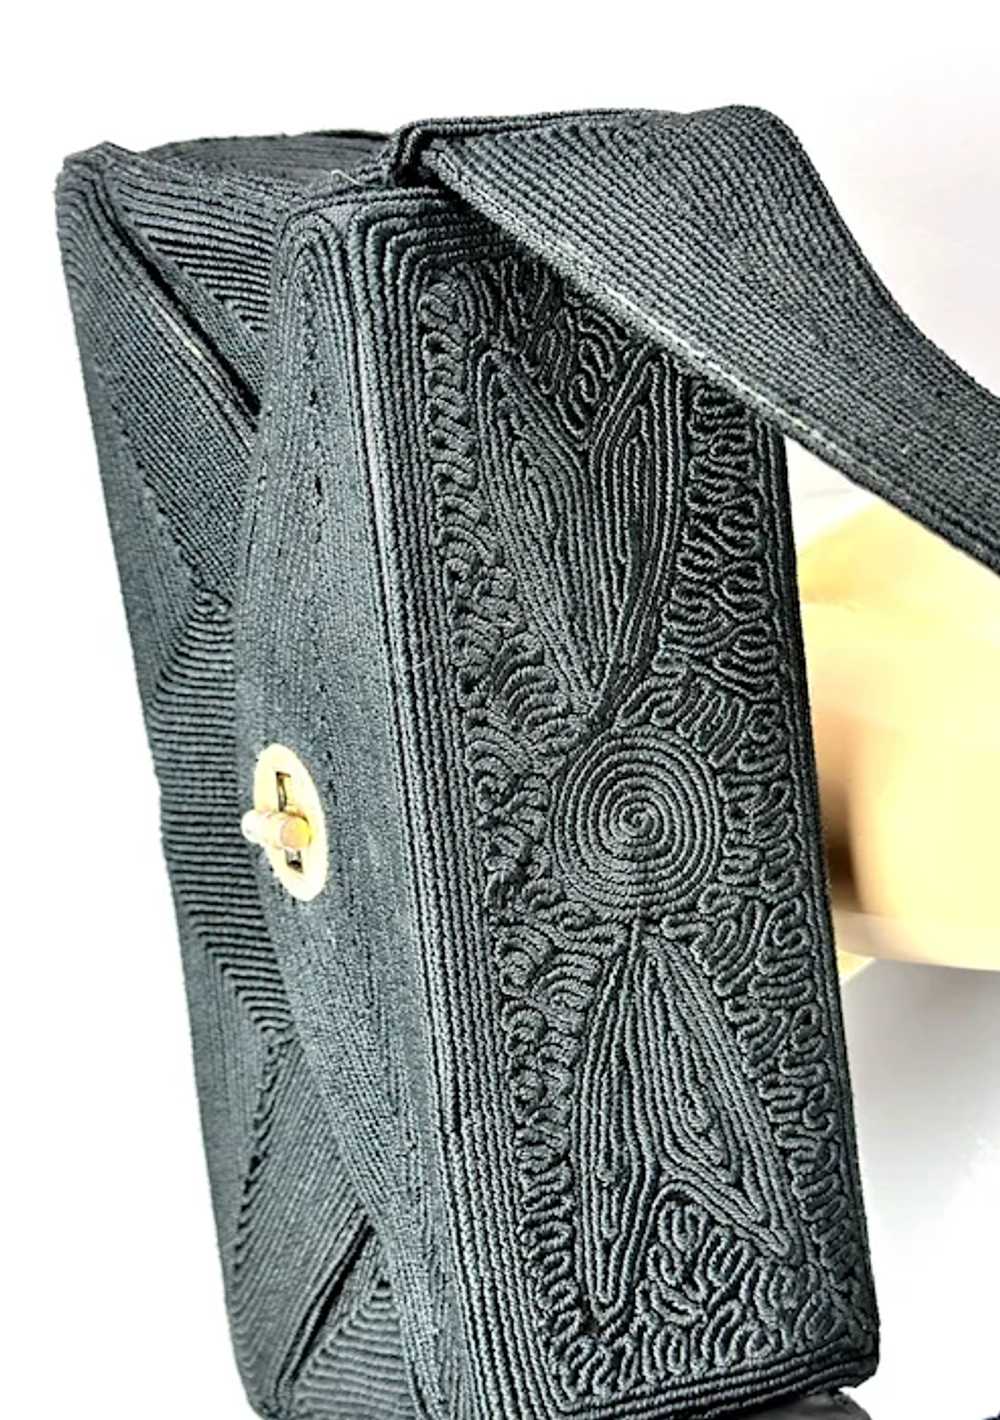 Vintage 1950s Black Corde Box Style Handbag - image 7